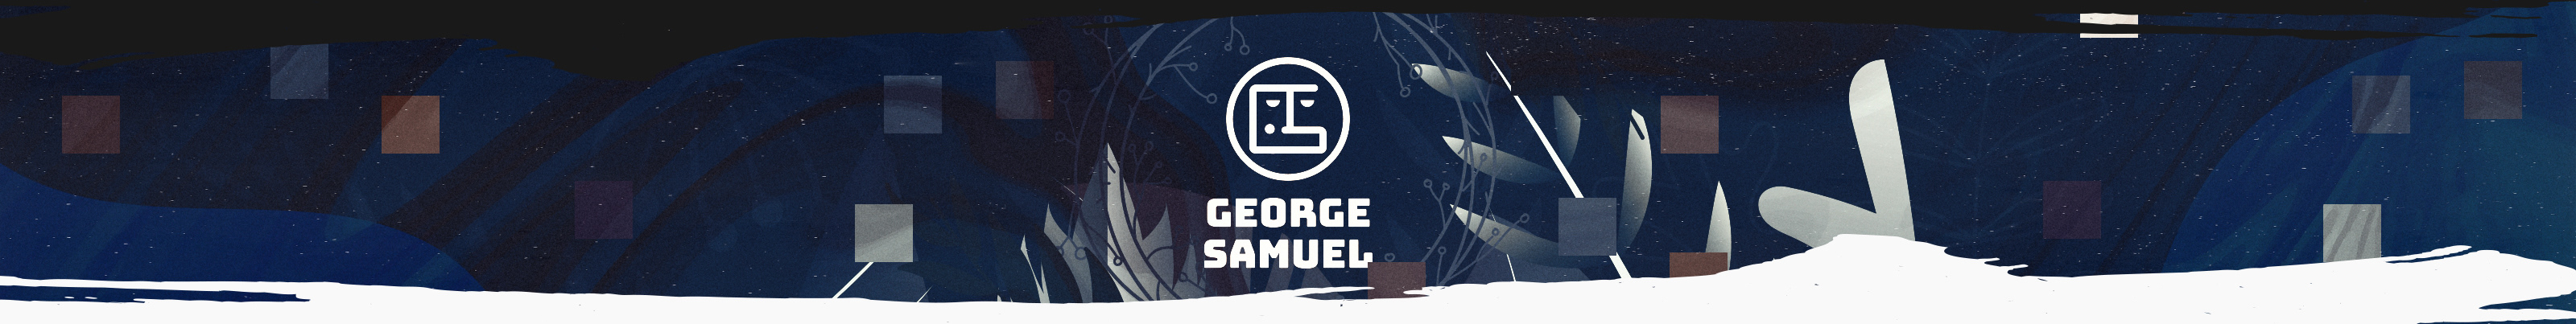 George Samuel's profile banner